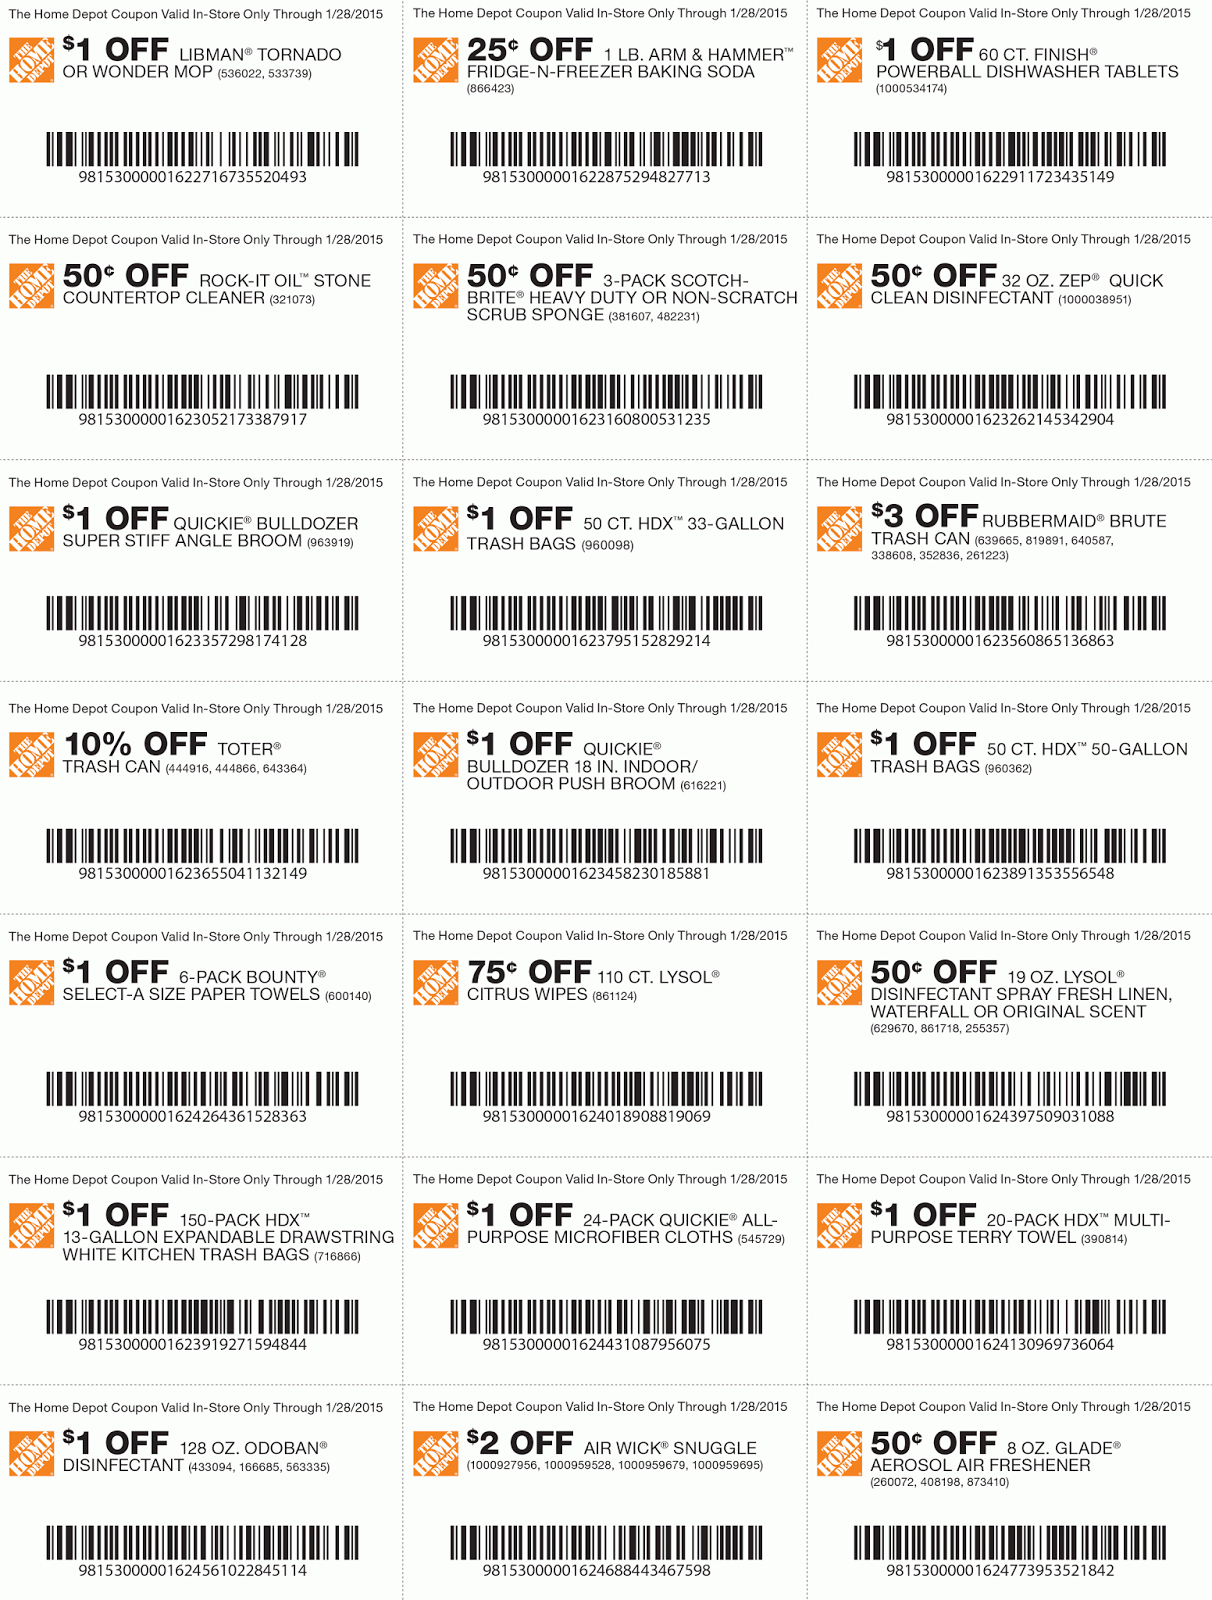 Oct November Home Depot Coupons | Printable Coupons Online - Free Printable Home Depot Coupons